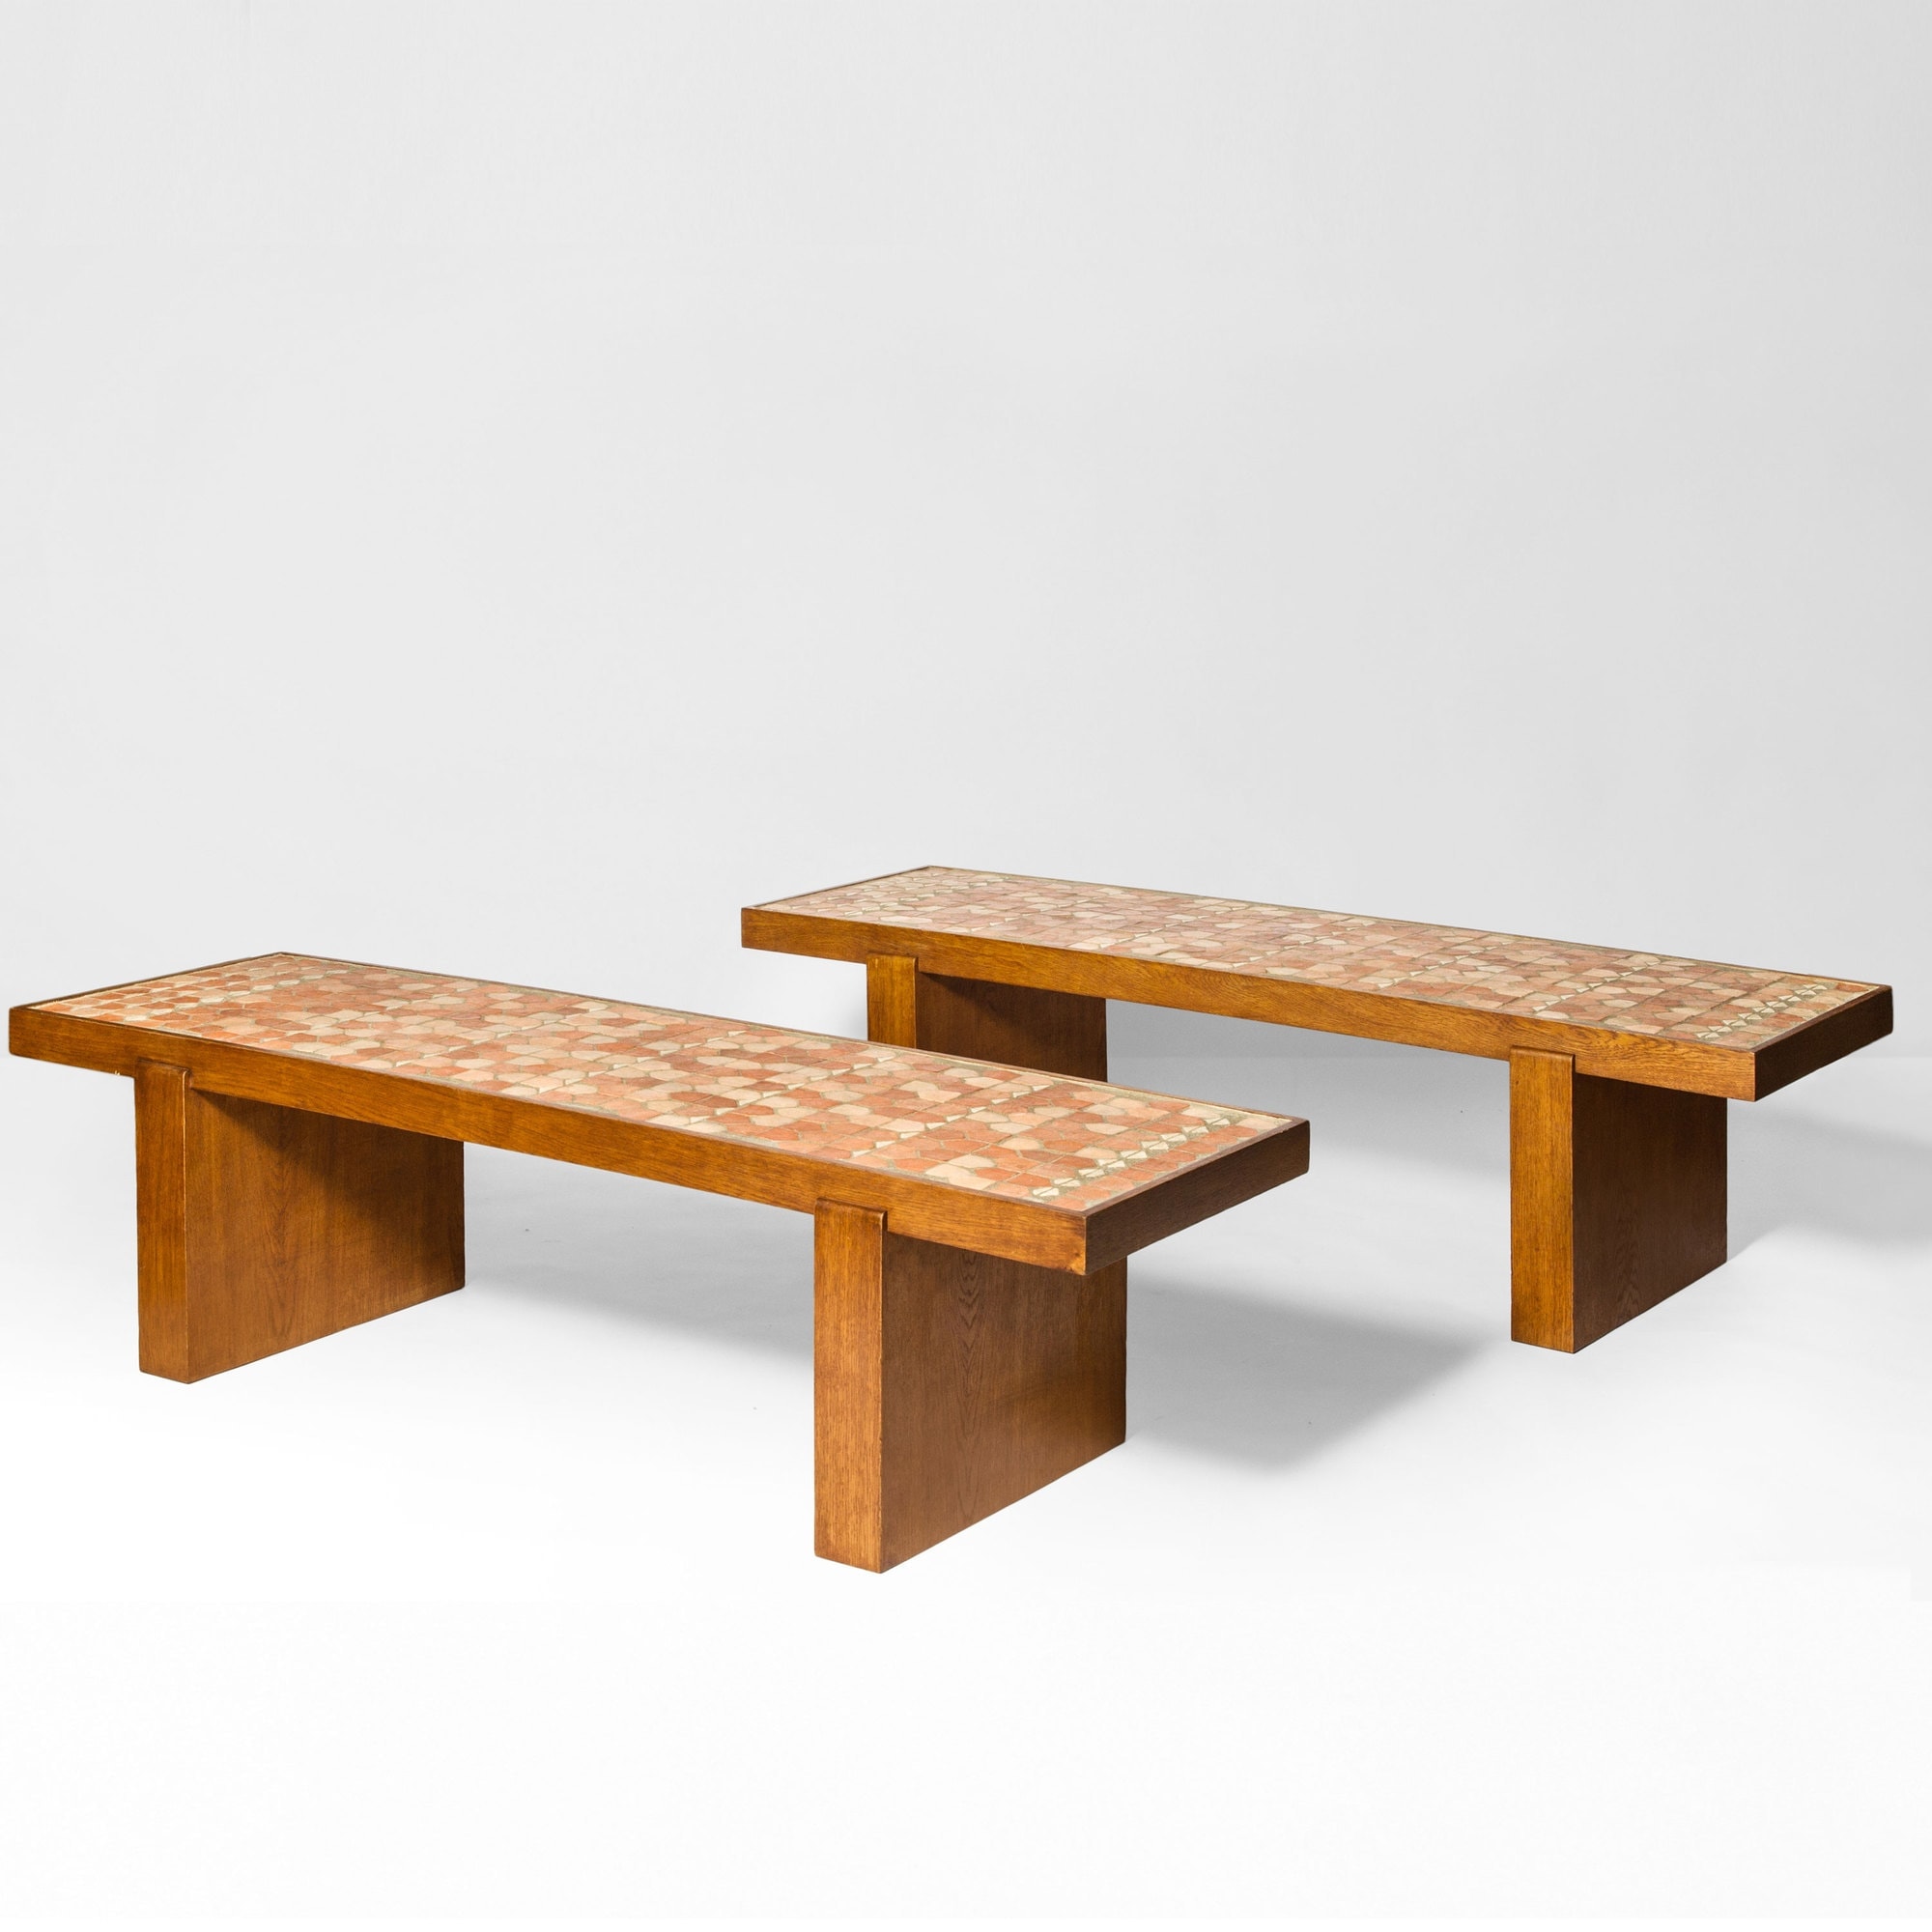 Pair of rectangular low tables